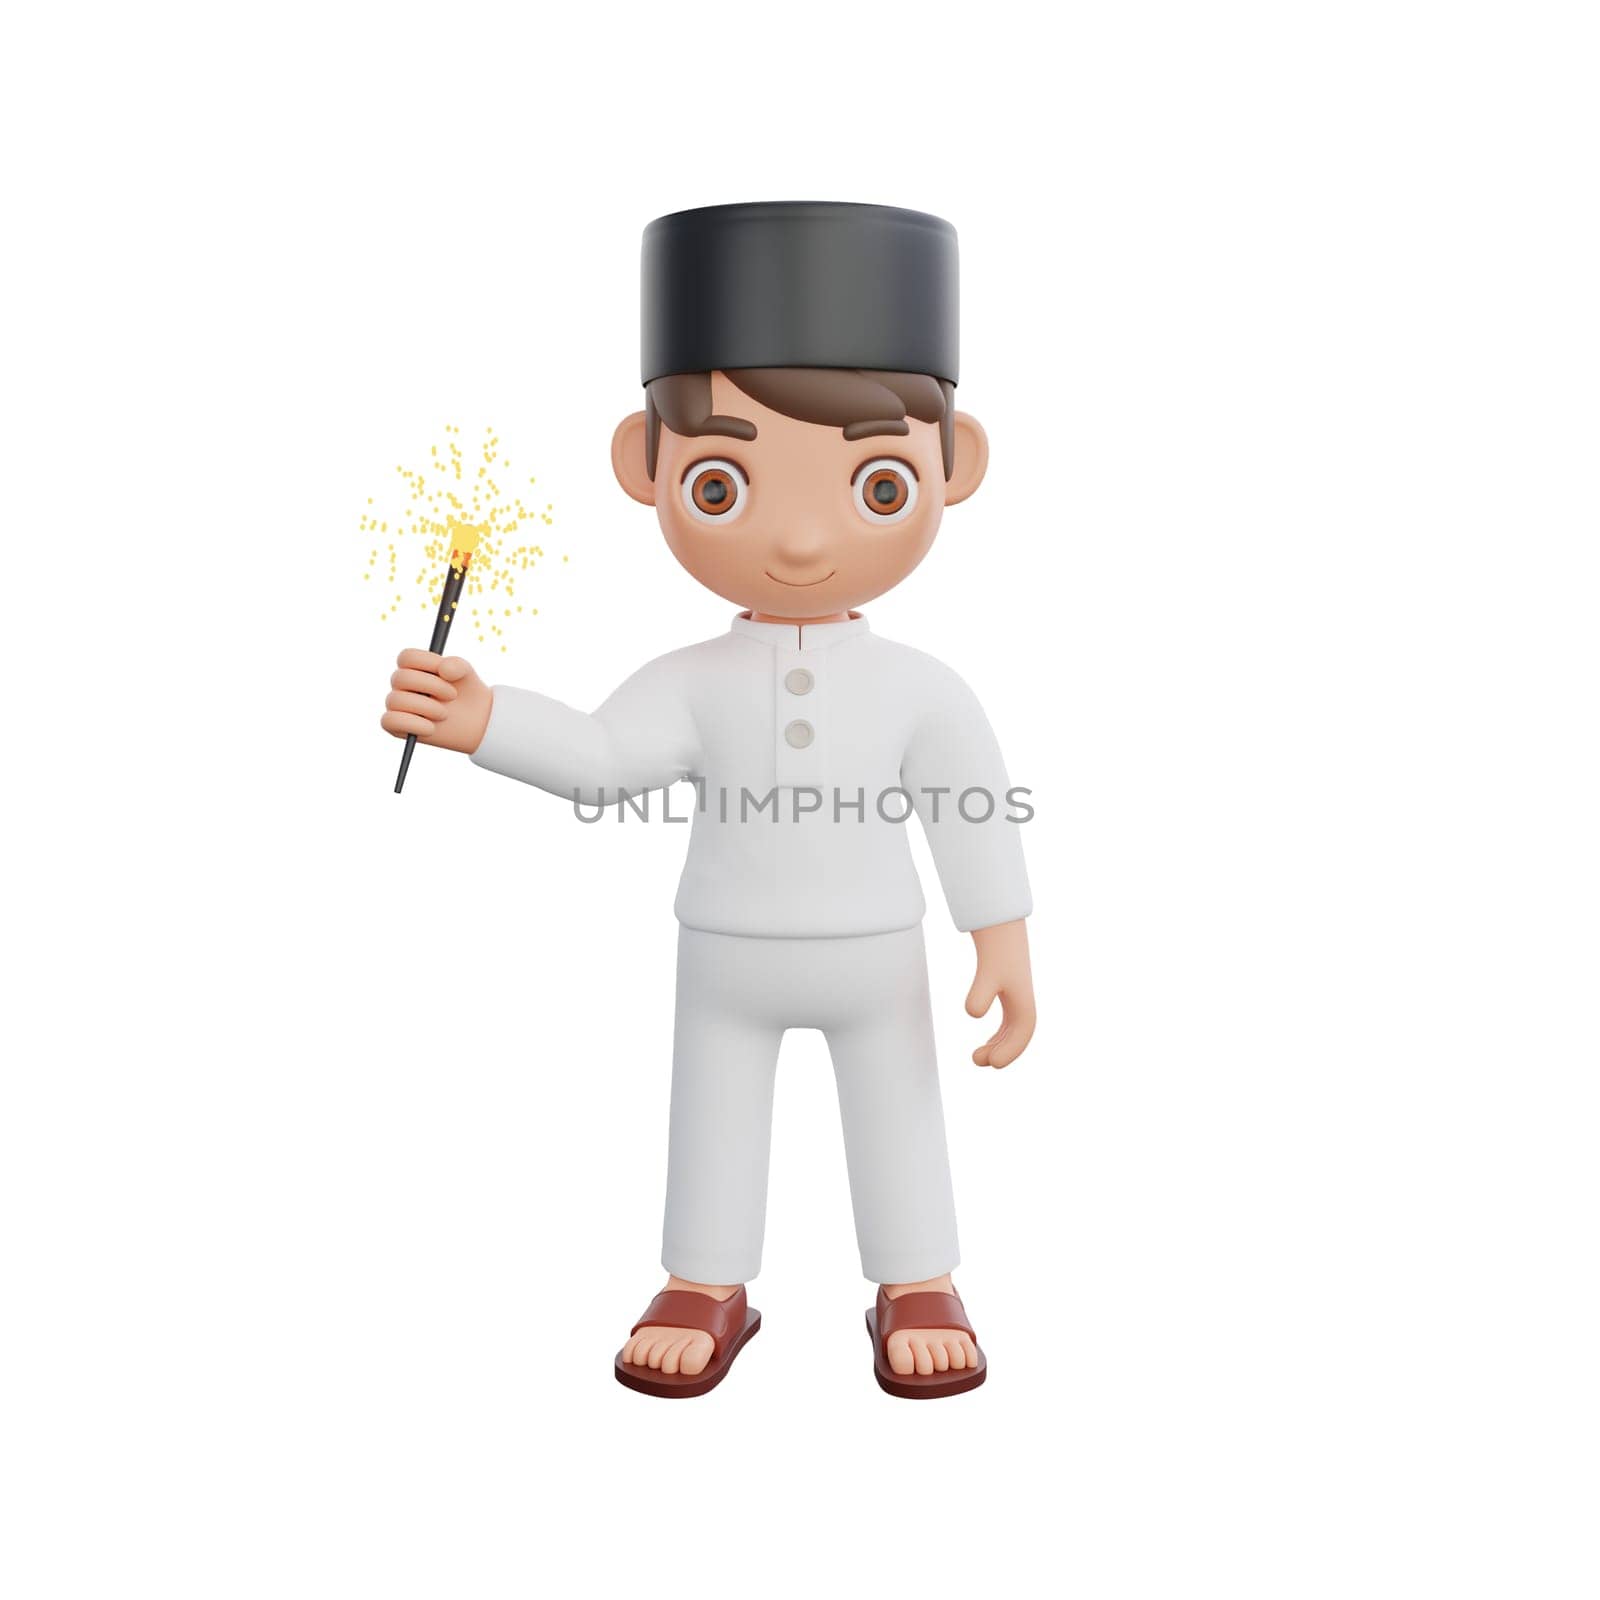 3D Illustration of Muslim character holding a sparkler by Rahmat_Djayusman